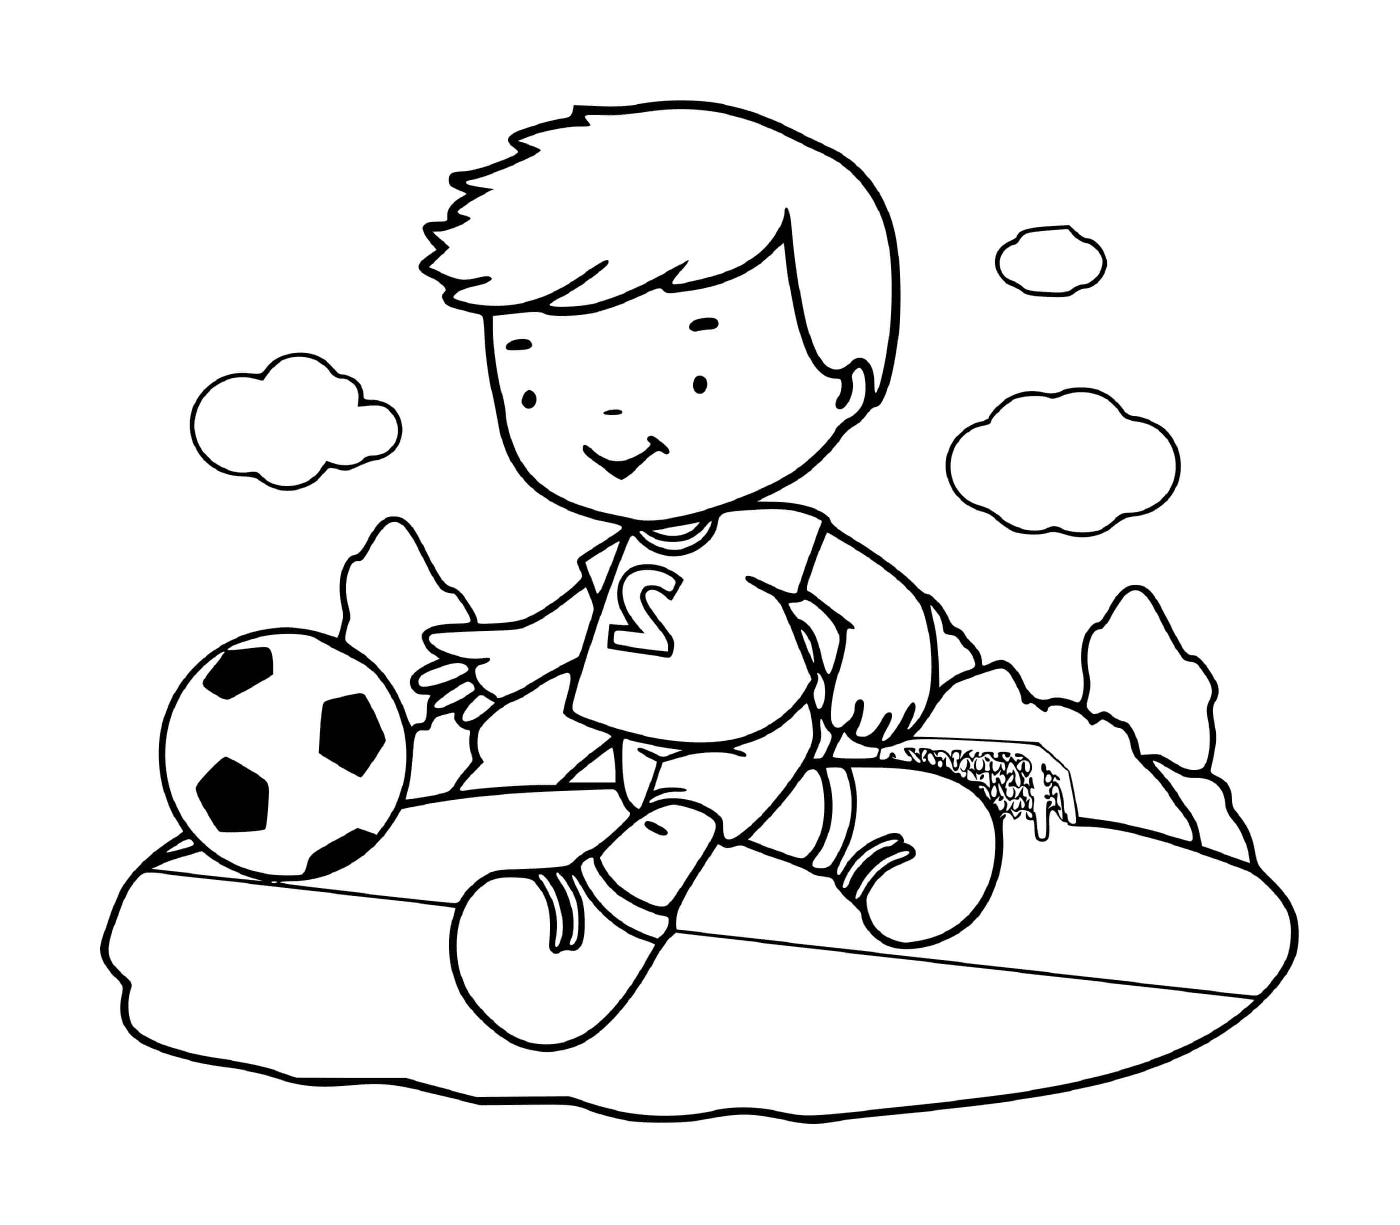   Un garçon joue avec enthousiasme au football 